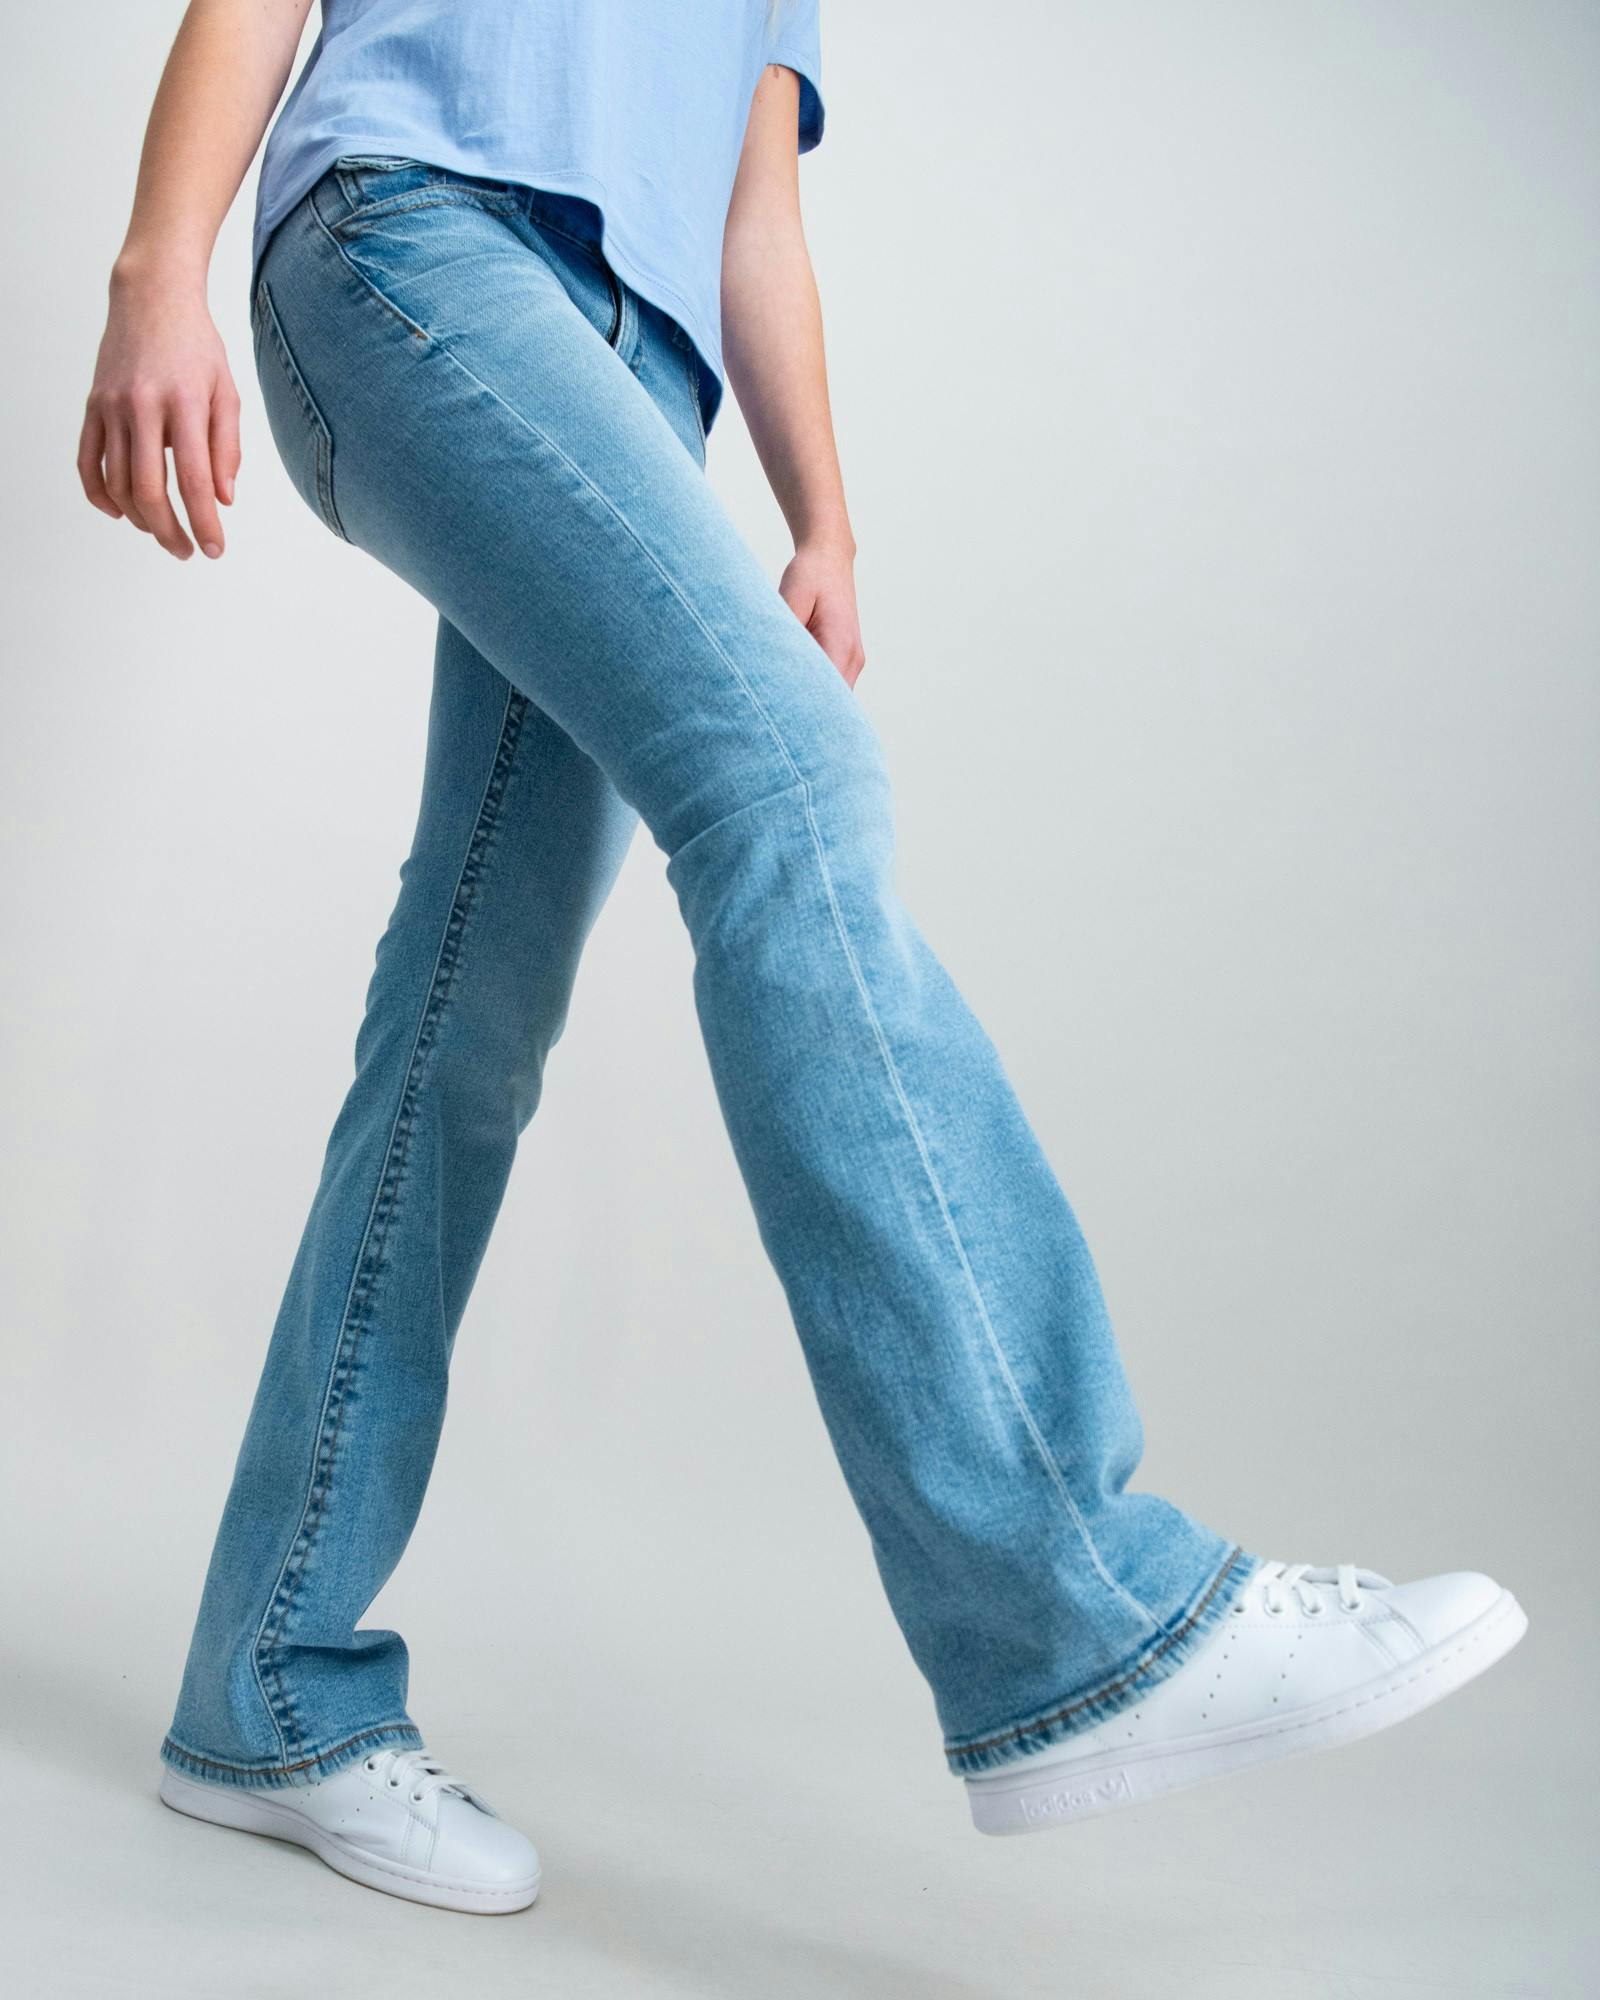 Chunky basic flare jeans